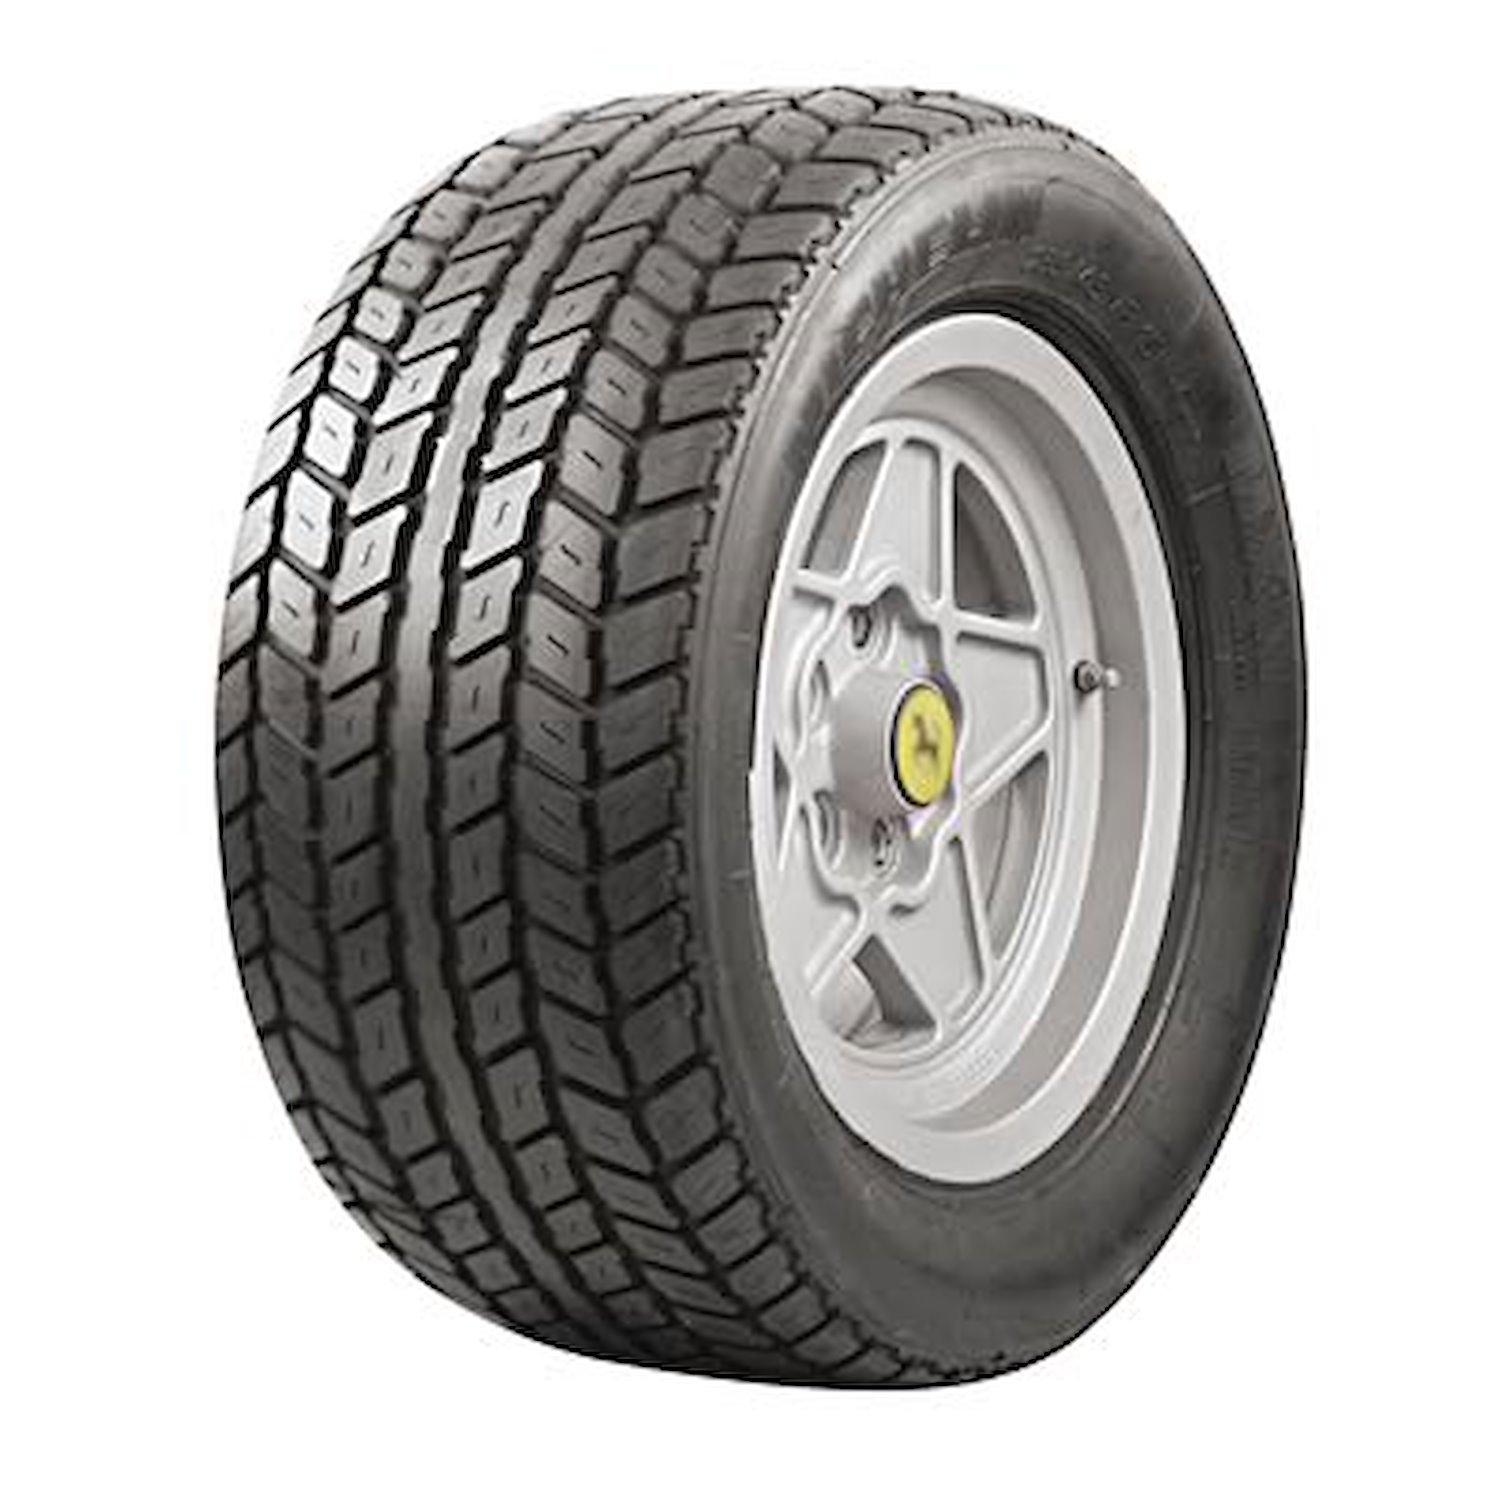 63070 Tire, Michelin MXW, 255/45VR15 93W